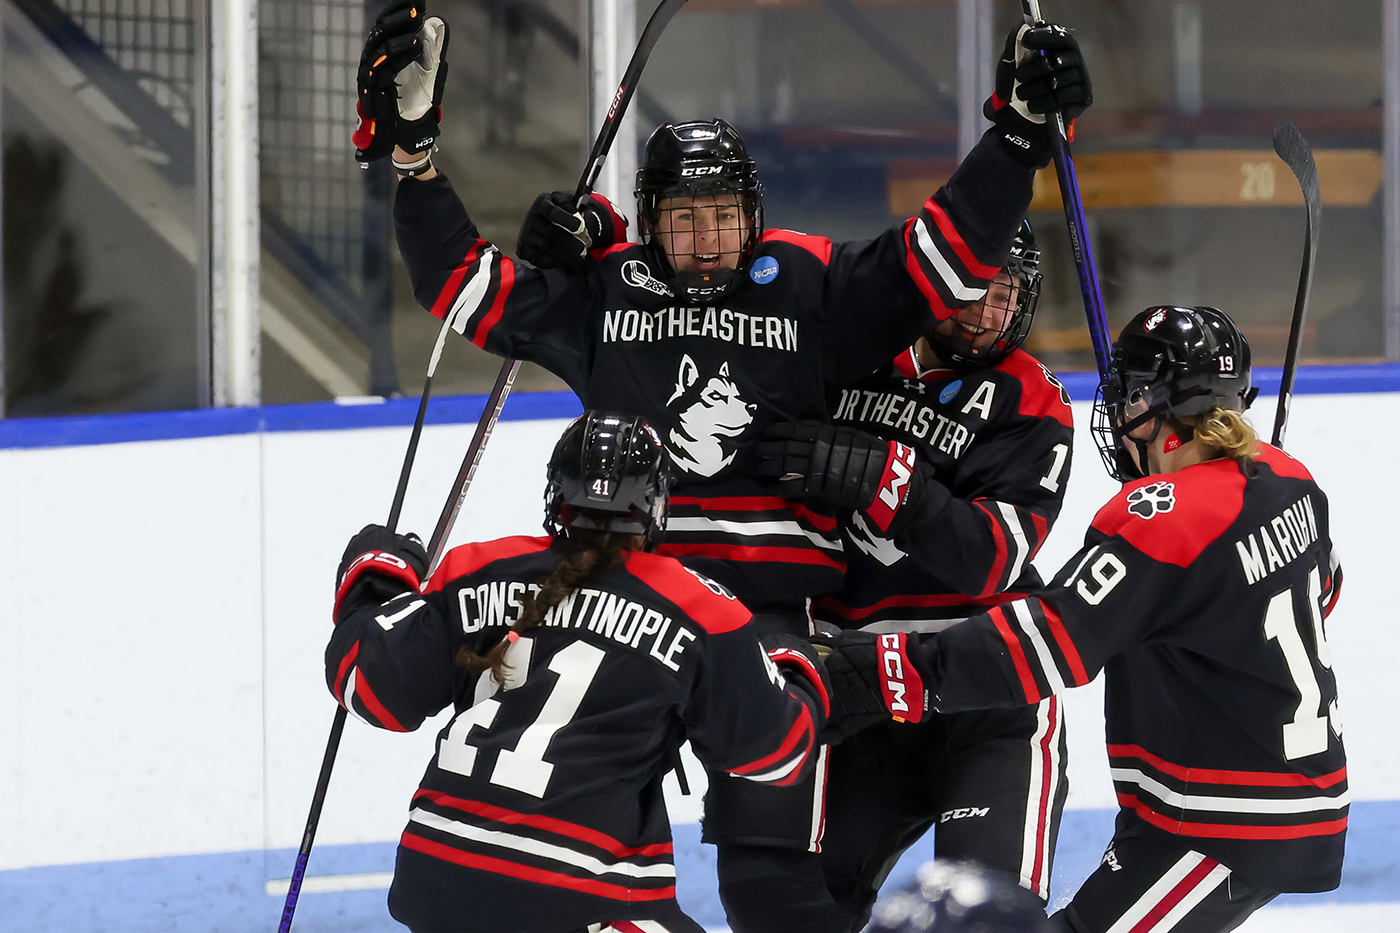 northeastern womens hockey players celebrating on the ice